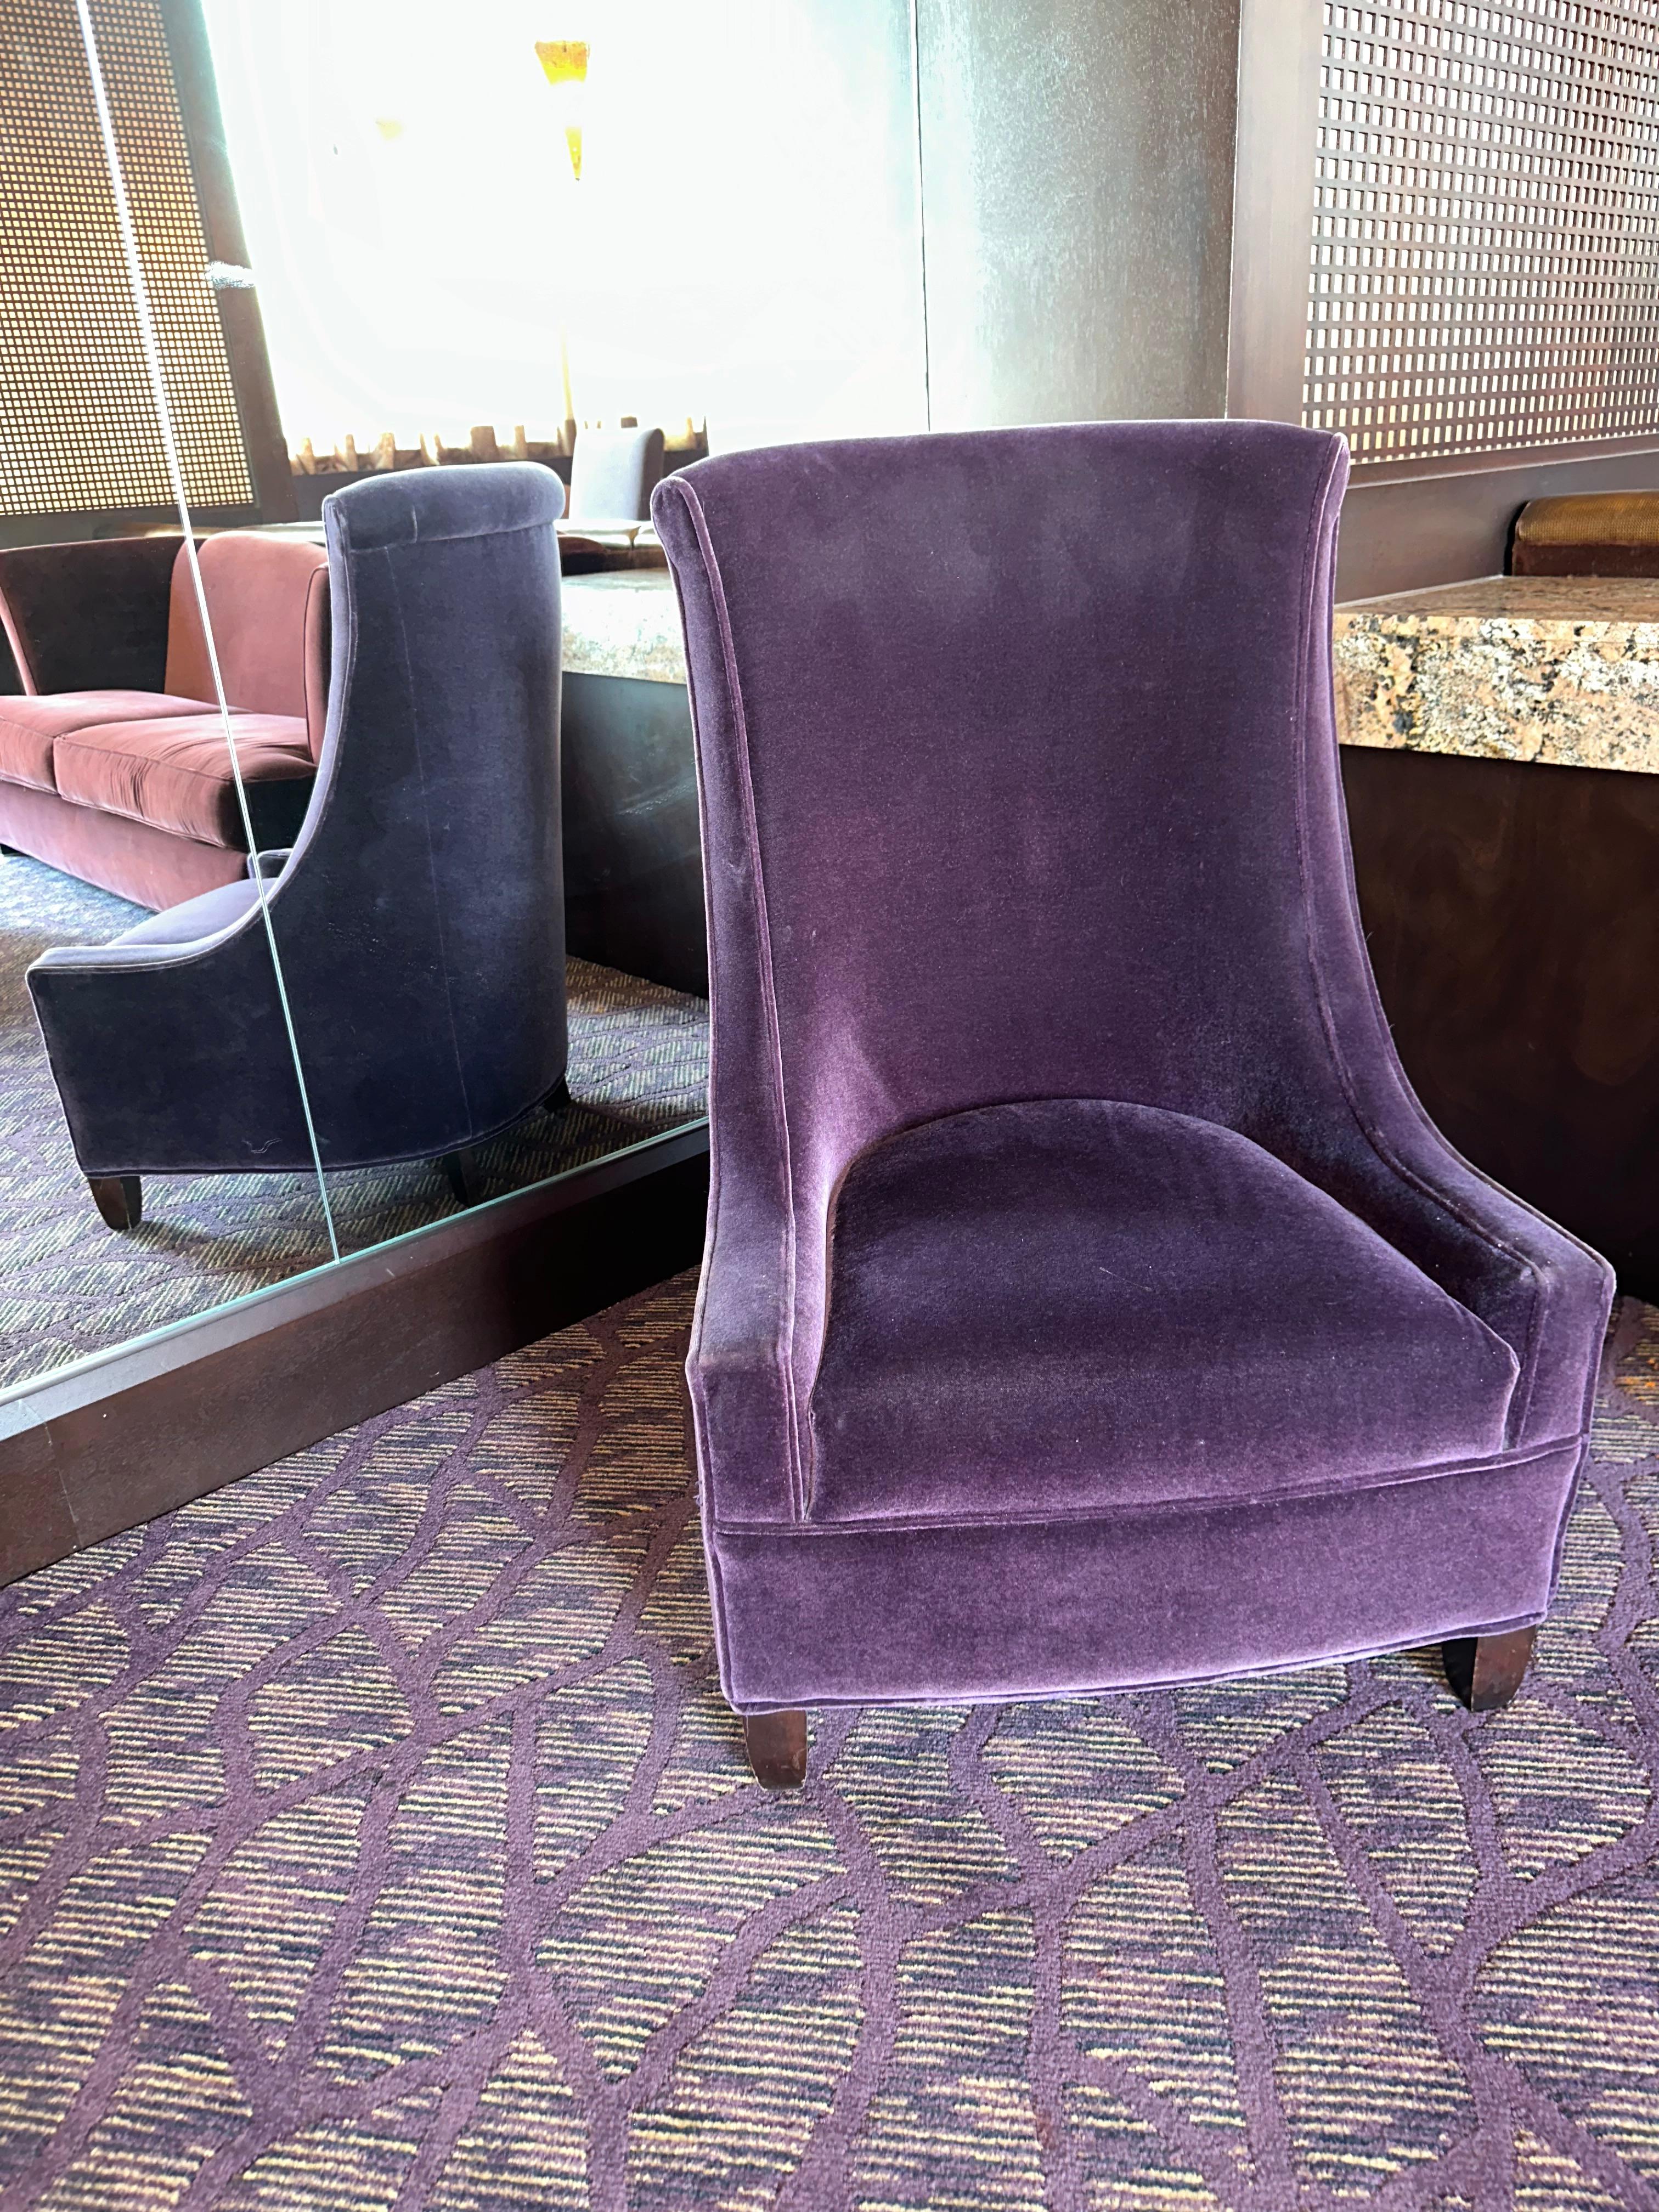 28"W x 24"D x 41"H Purple Fabric High Back Chair